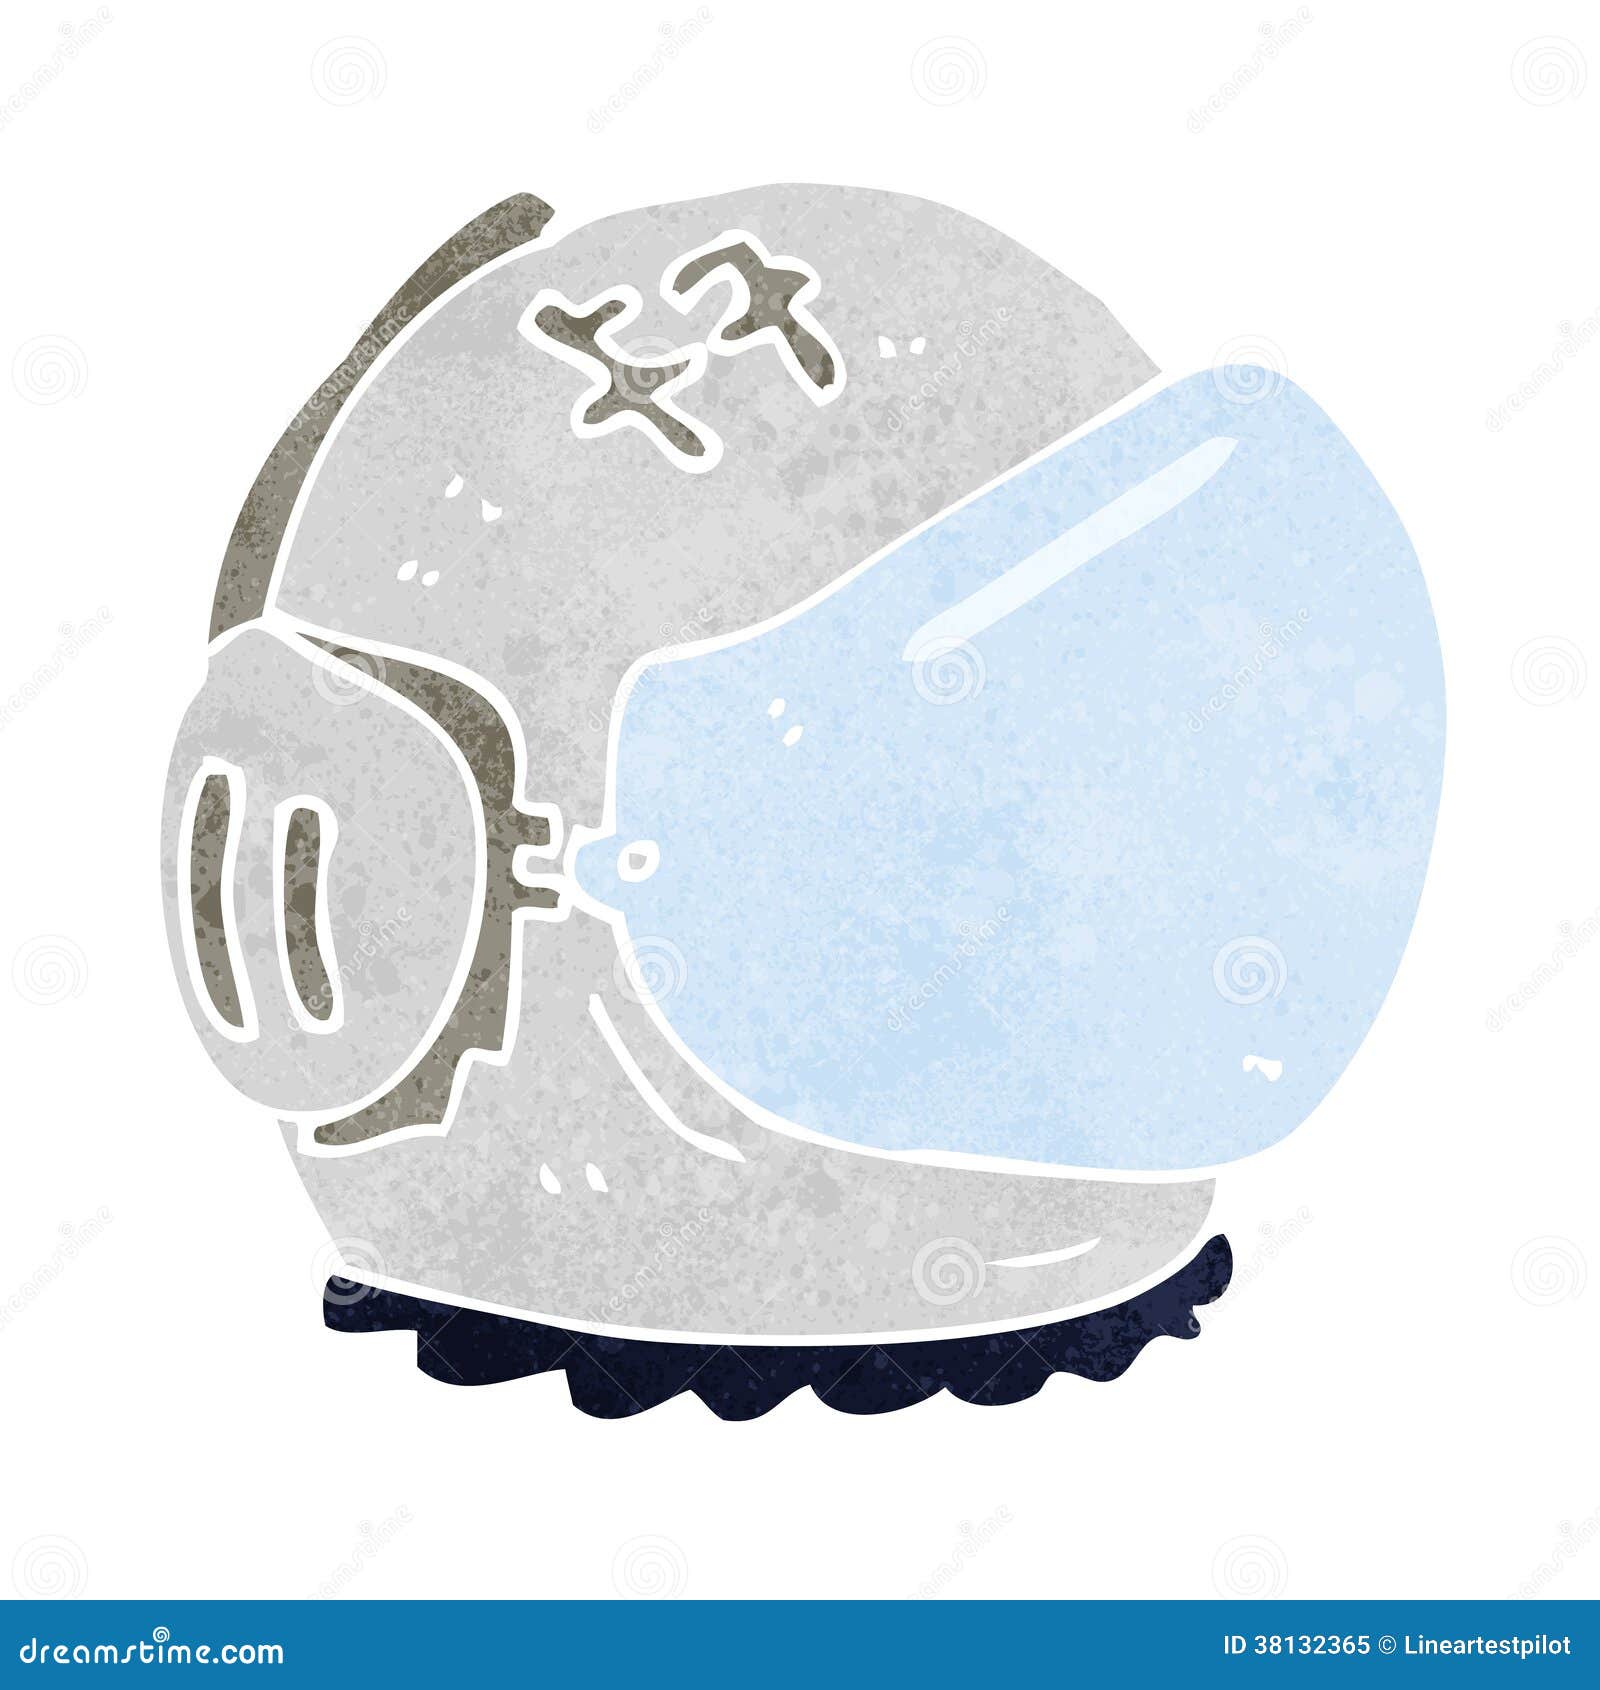 Cartoon astronaut helmet stock illustration. Illustration of doodle